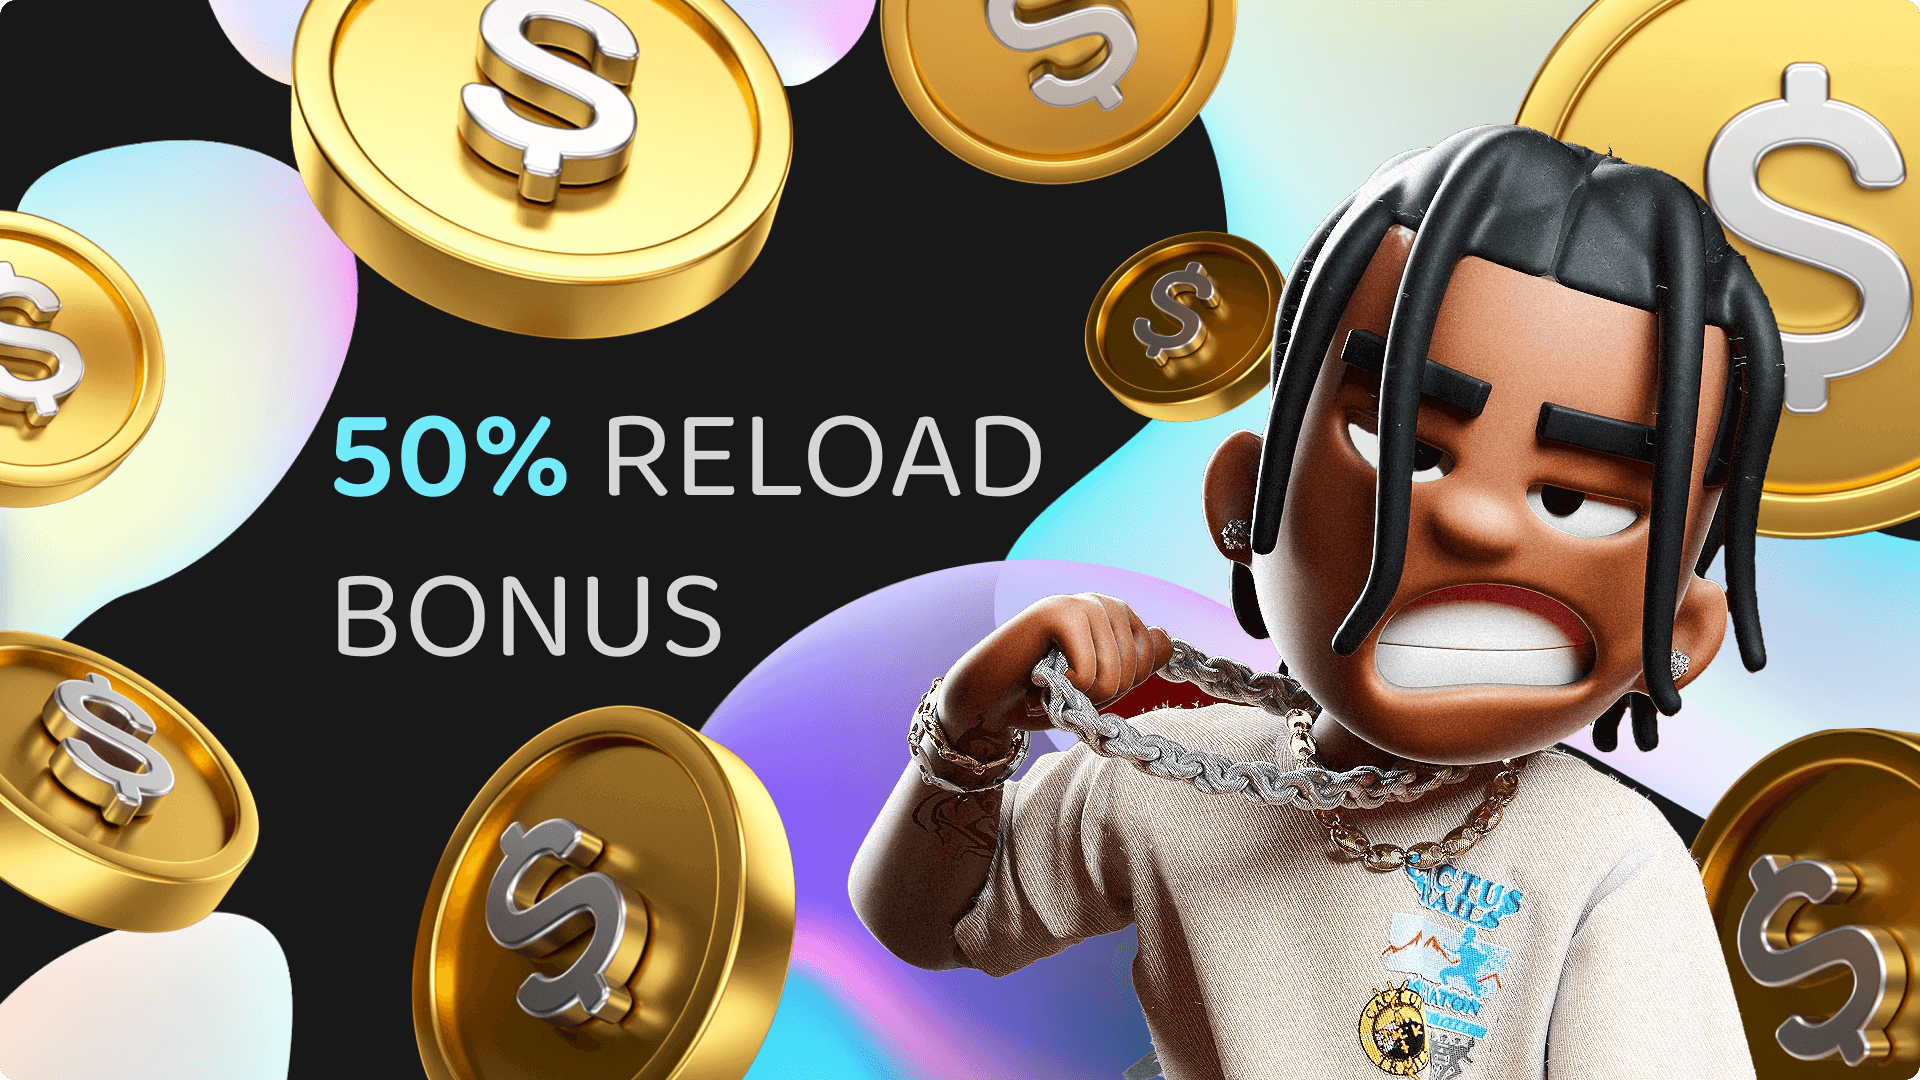 50% Reload bonus